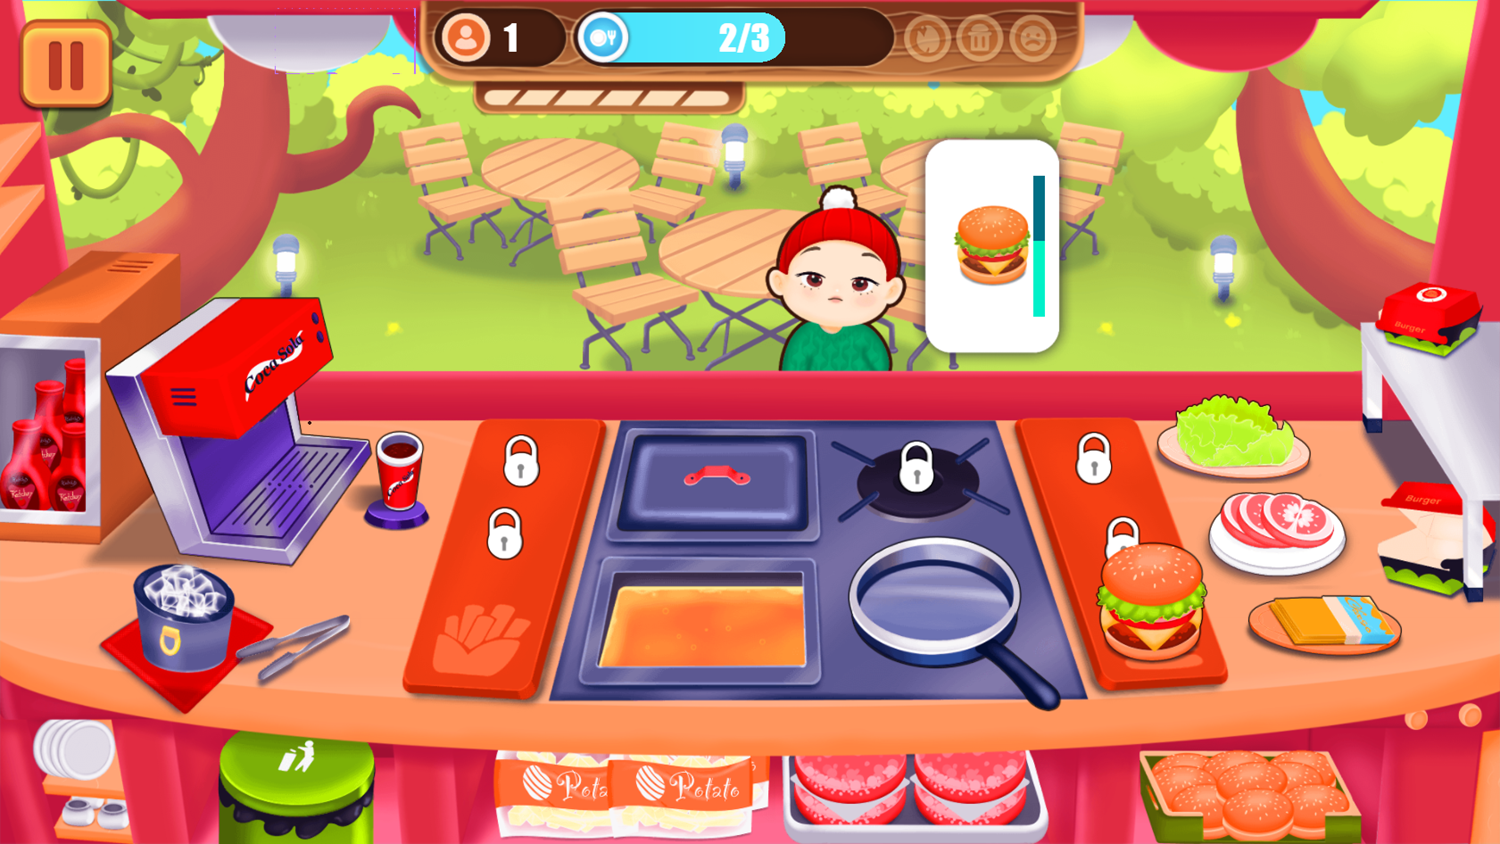 Cooking Fever Game Level Progress Screenshot.